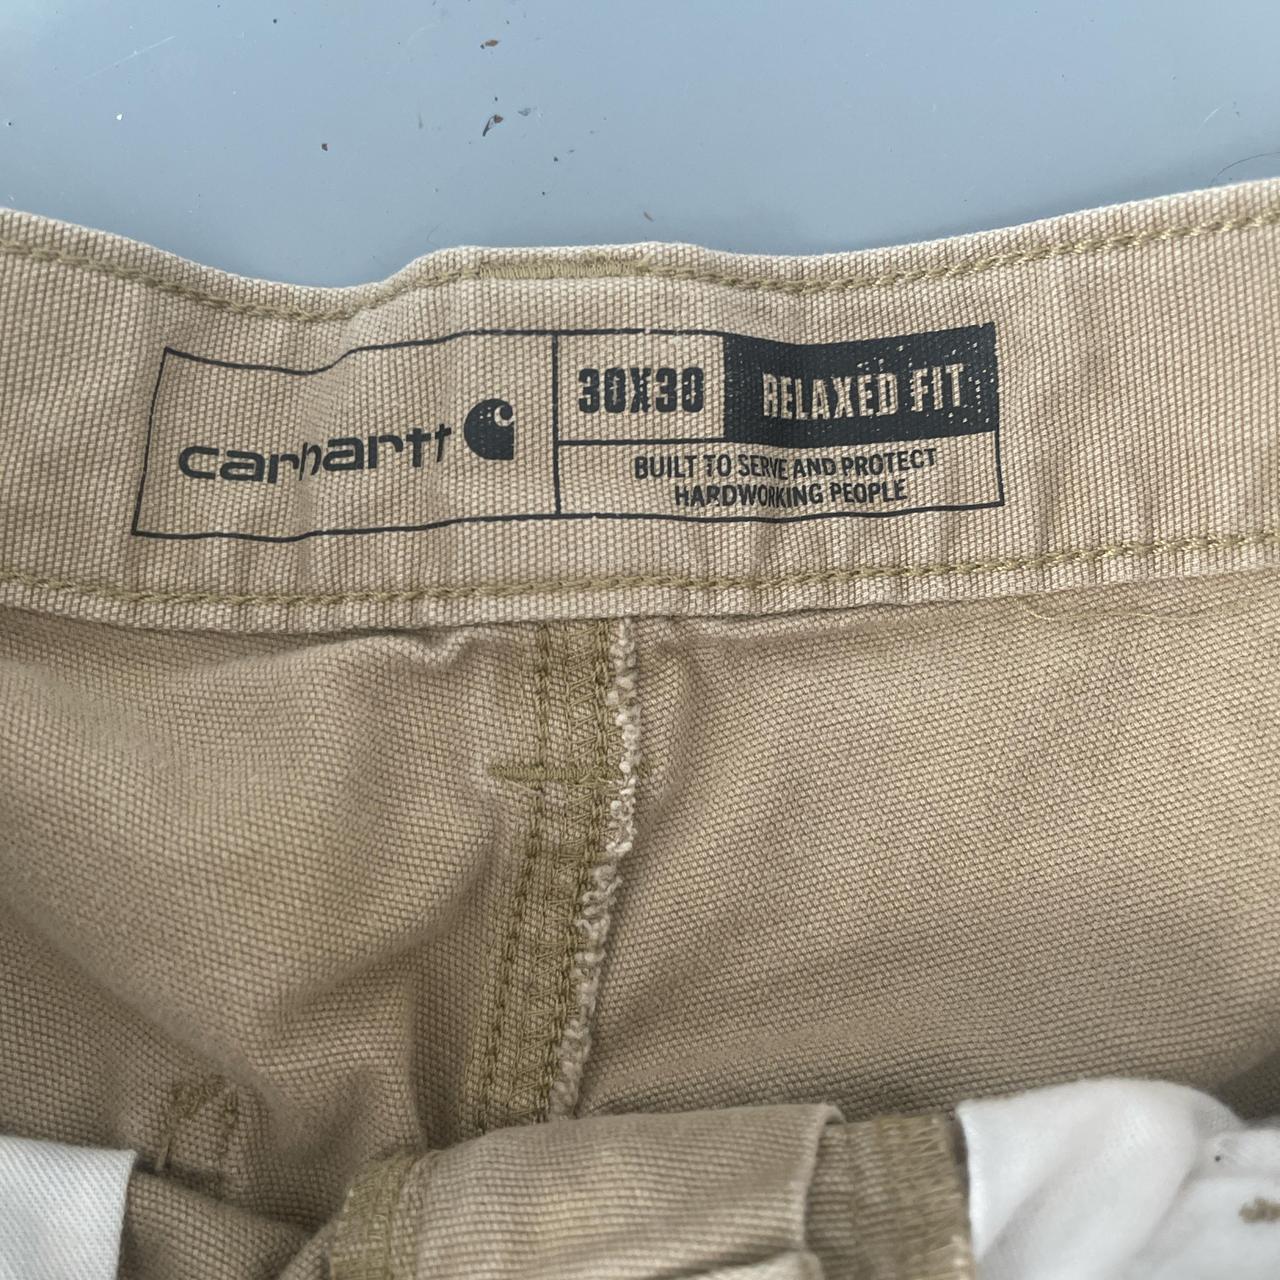 Carhartt Pants Size 30x30 Good Condition Minor... - Depop